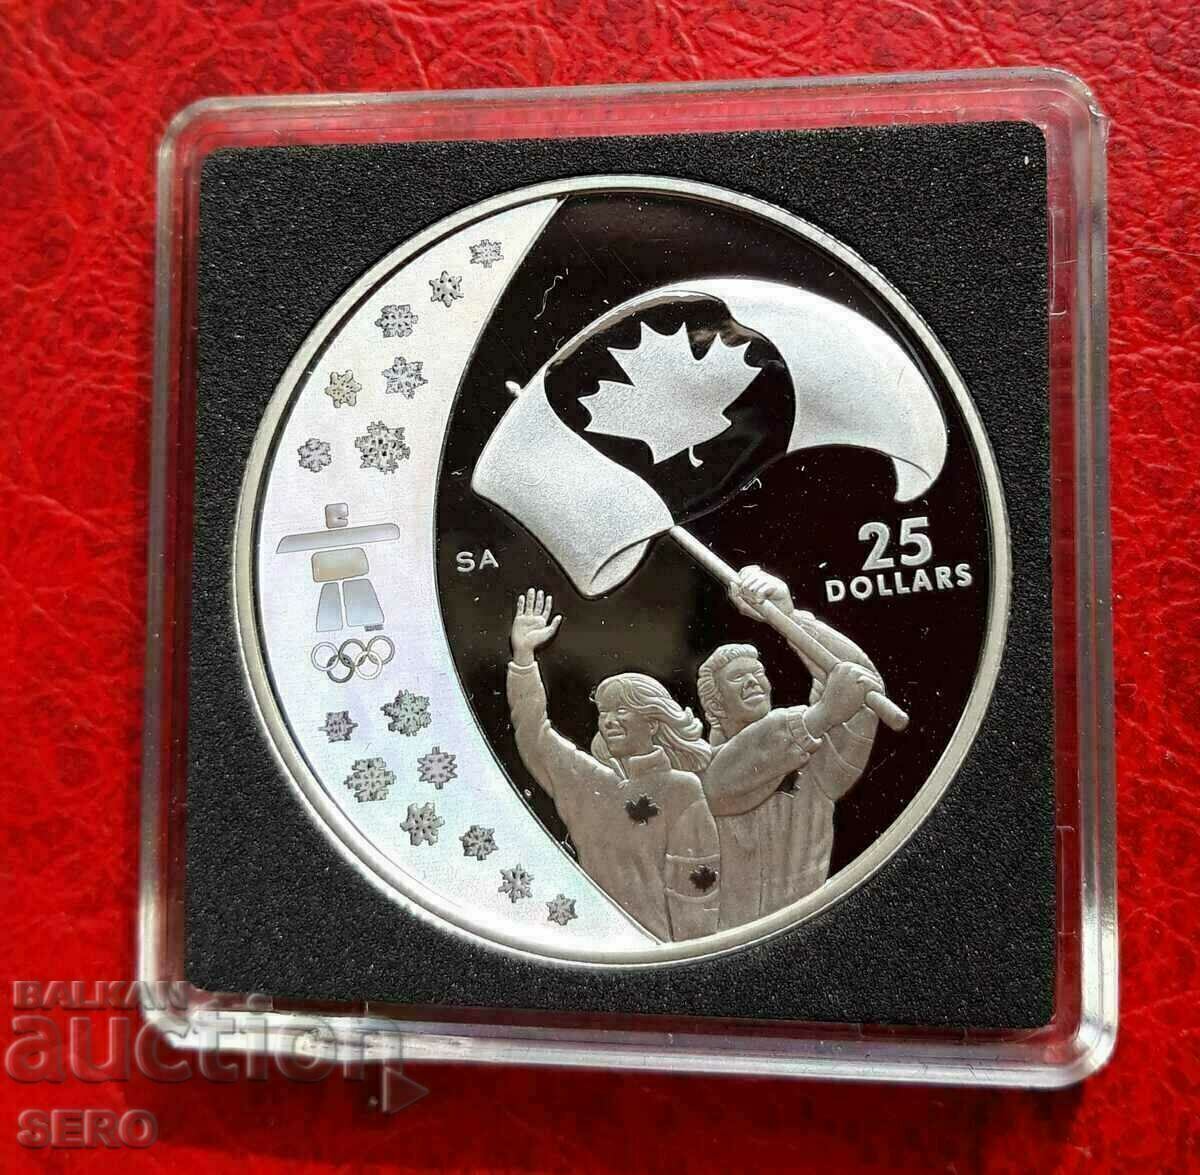 Canada-$25 2007-matt-glossy-very rare-45,000 pieces